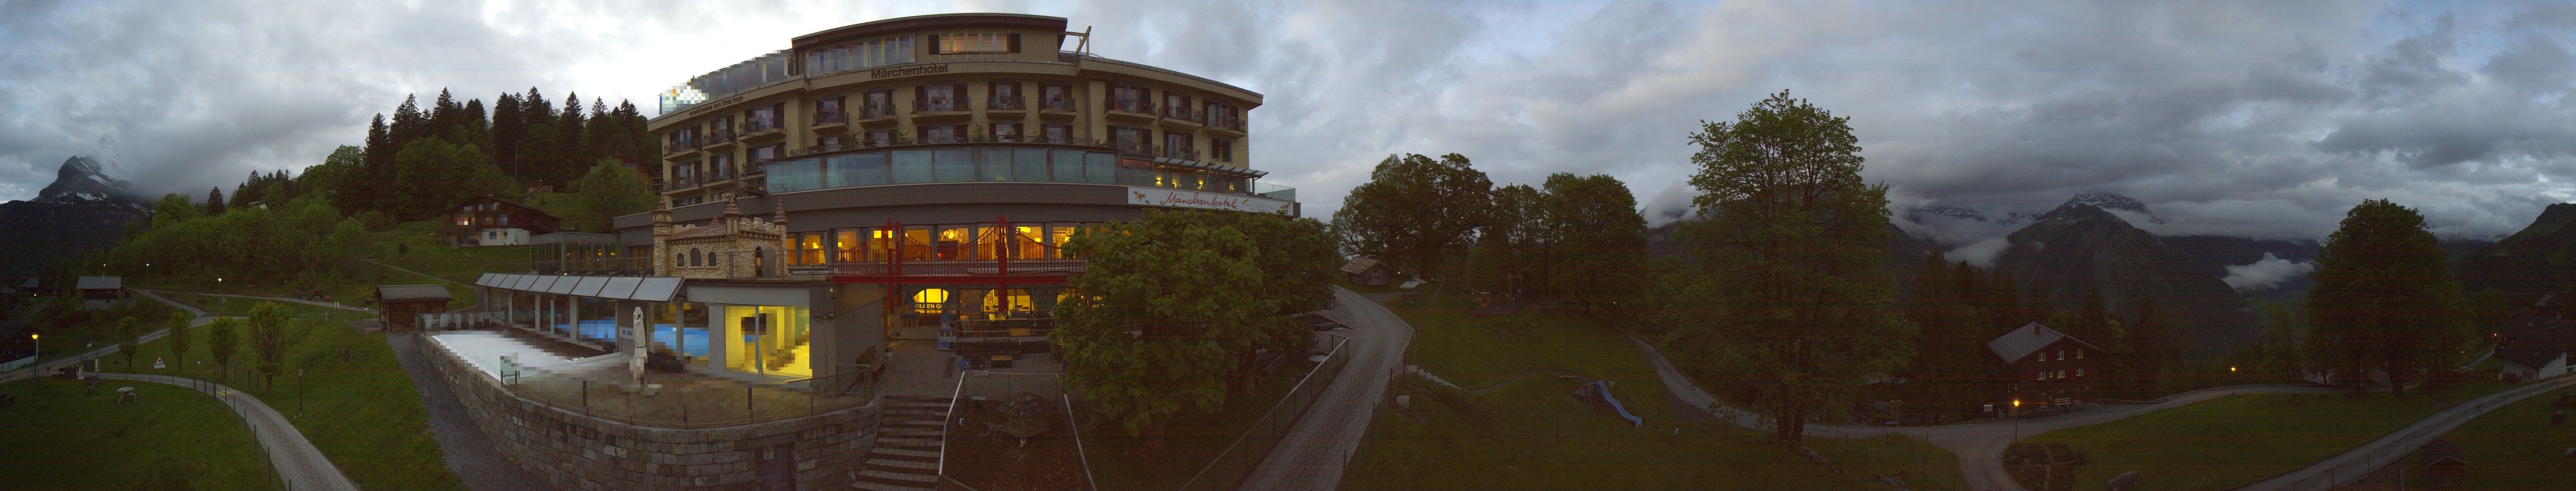 Glarus Süd: Märchenhotel Braunwald